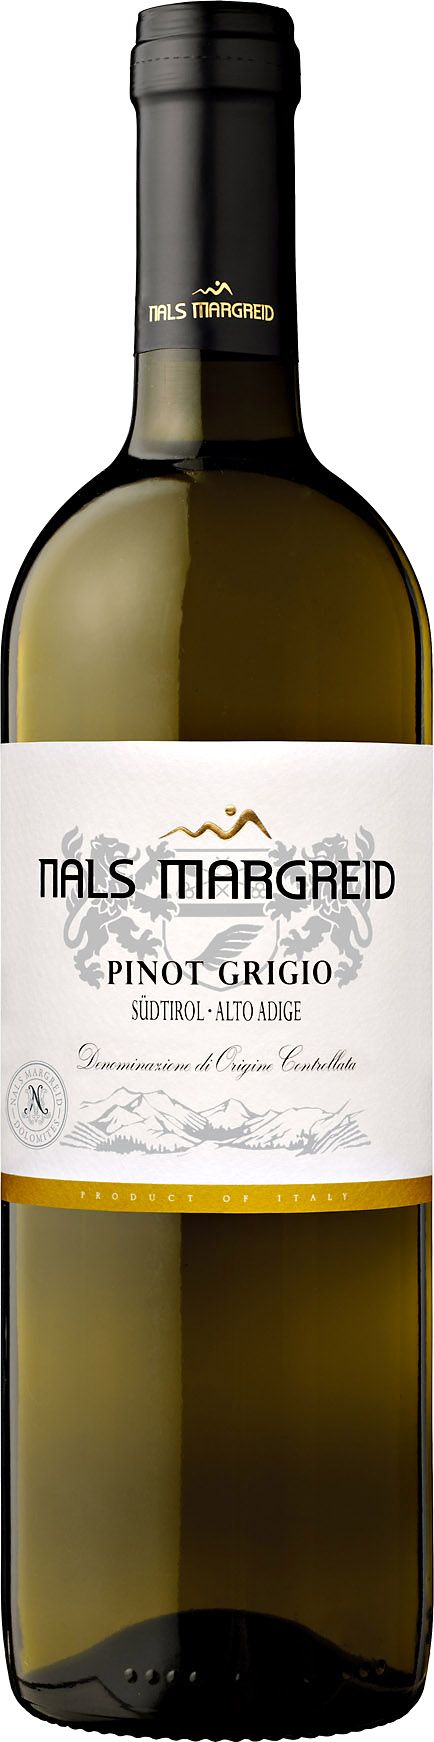 Nals Margreid, Pinot Grigio, 2012